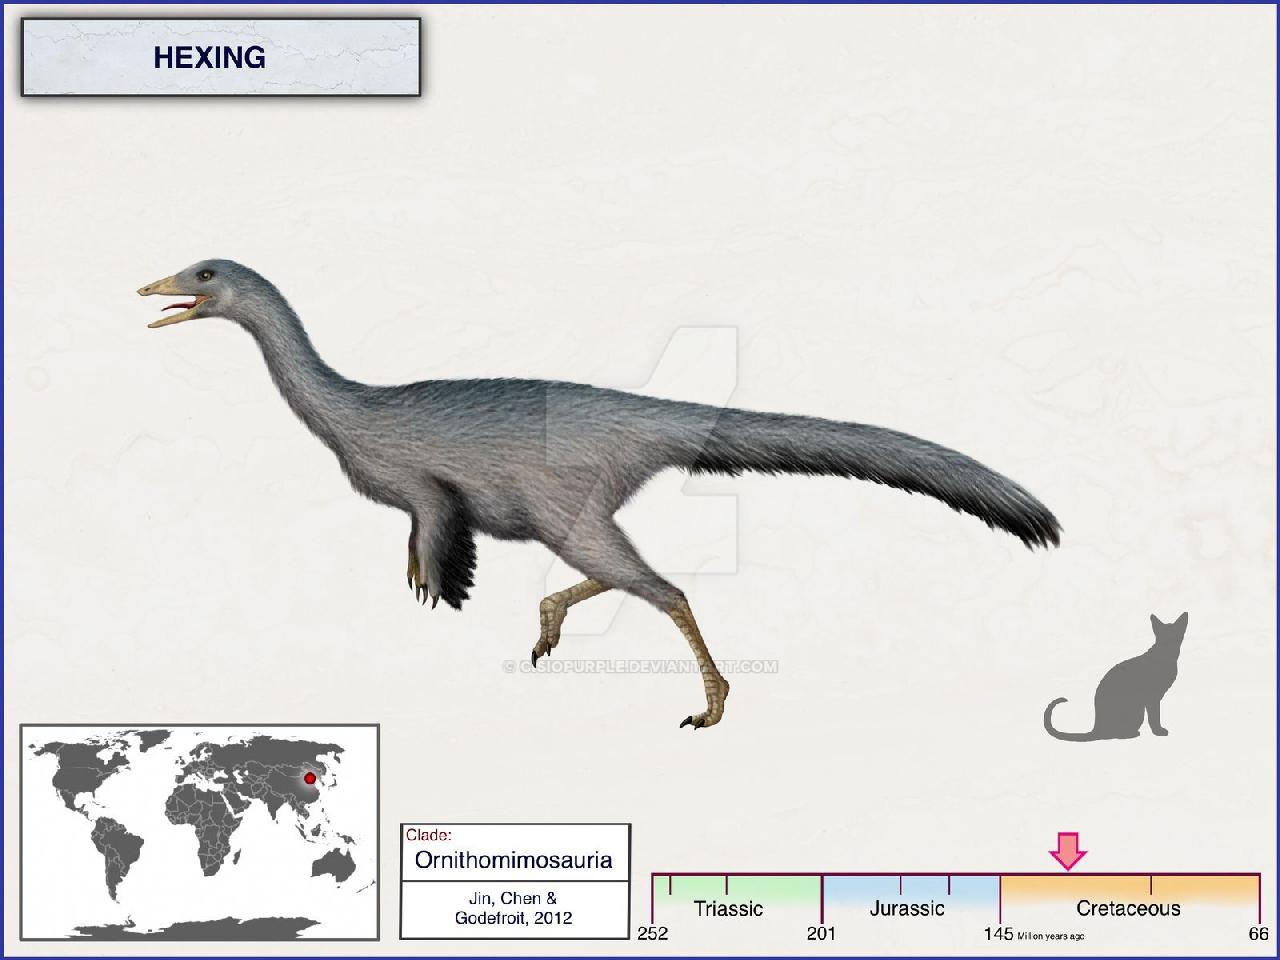 Hexing, Cretaceous
(Меловой период)